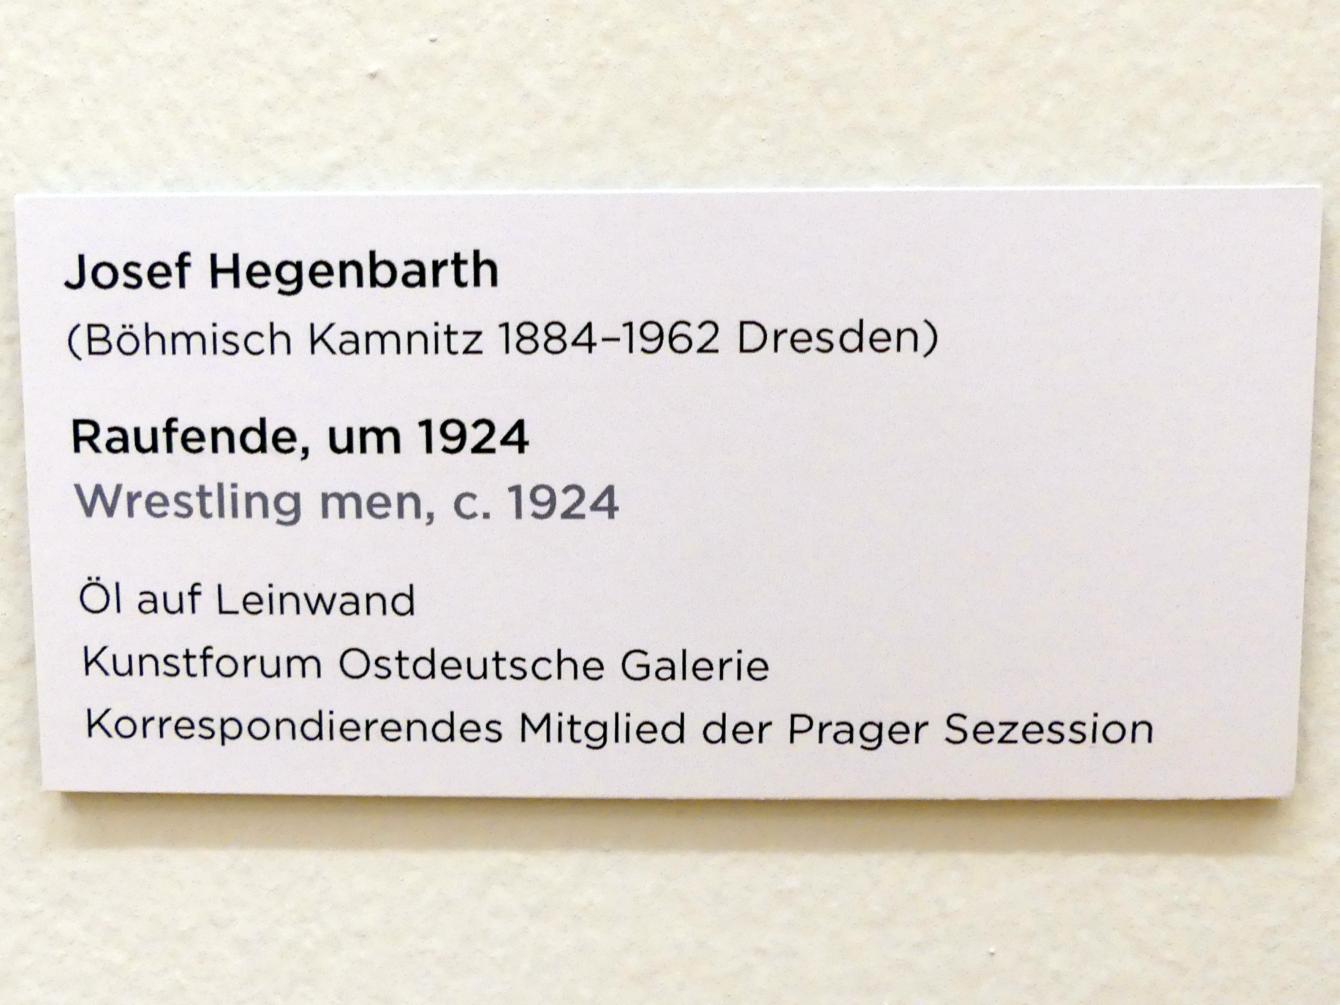 Josef Hegenbarth (1924), Raufende, Regensburg, Ostdeutsche Galerie, Saal 4, um 1924, Bild 2/2